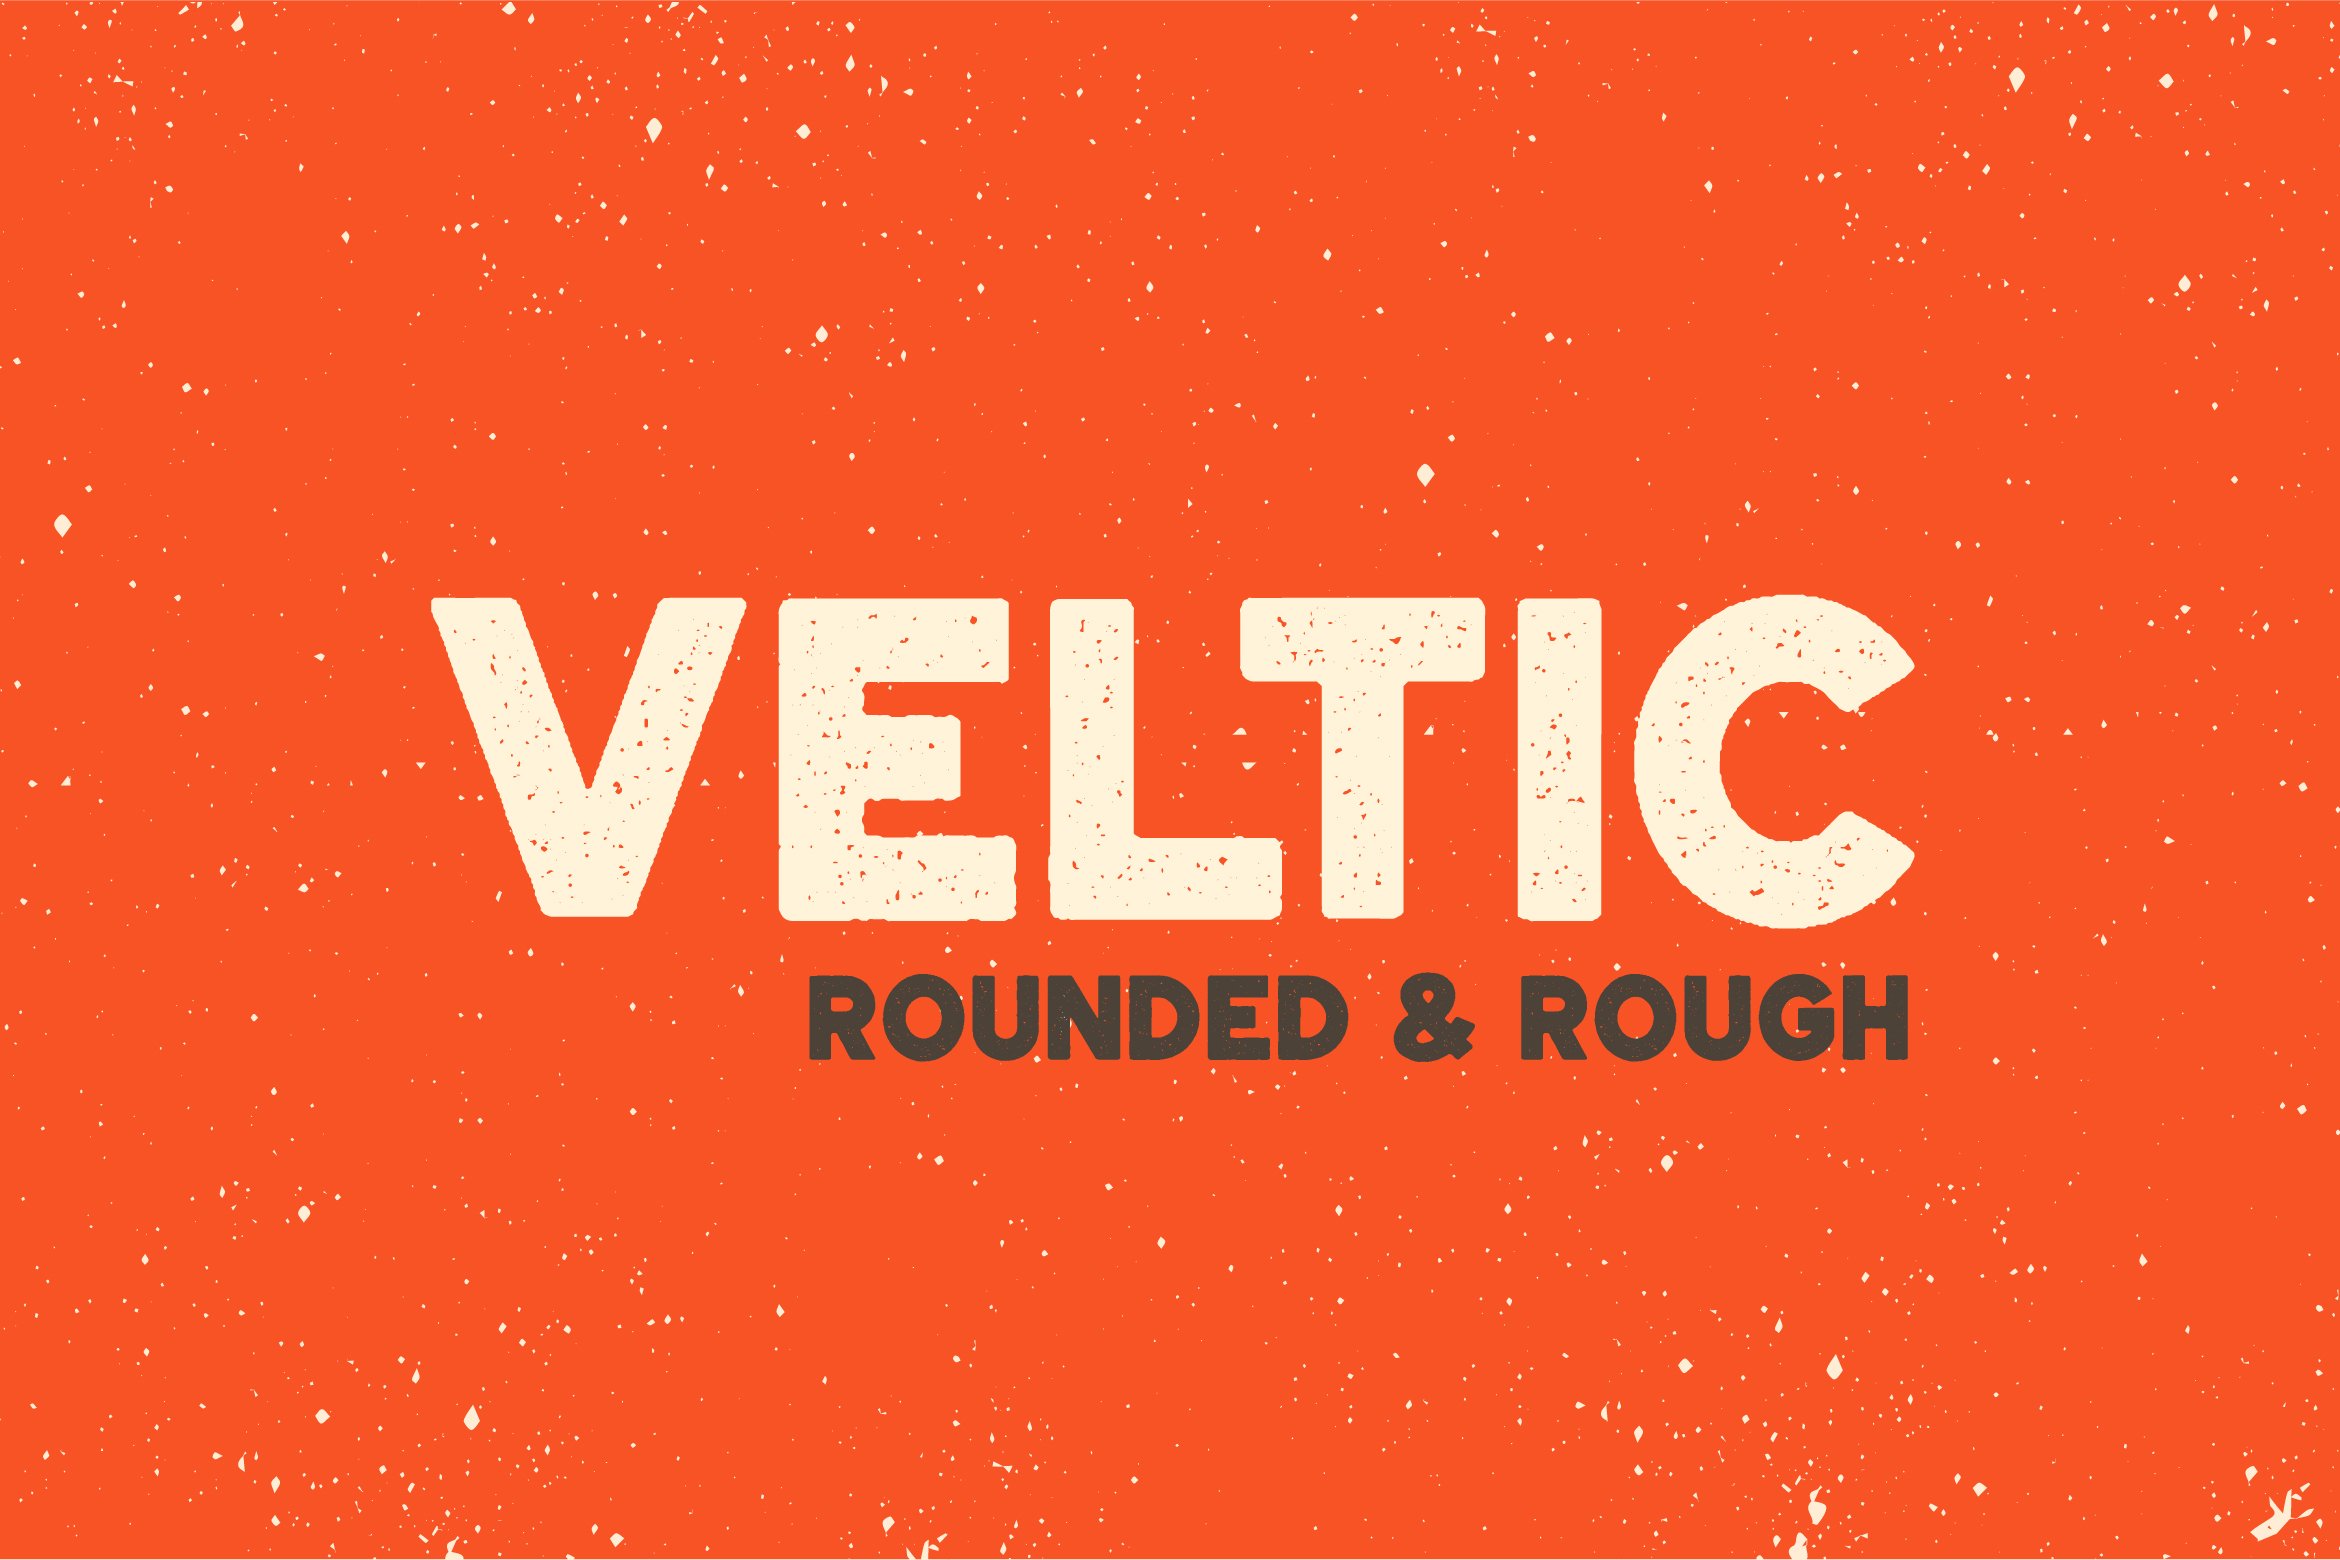 Veltic Typeface cover image.